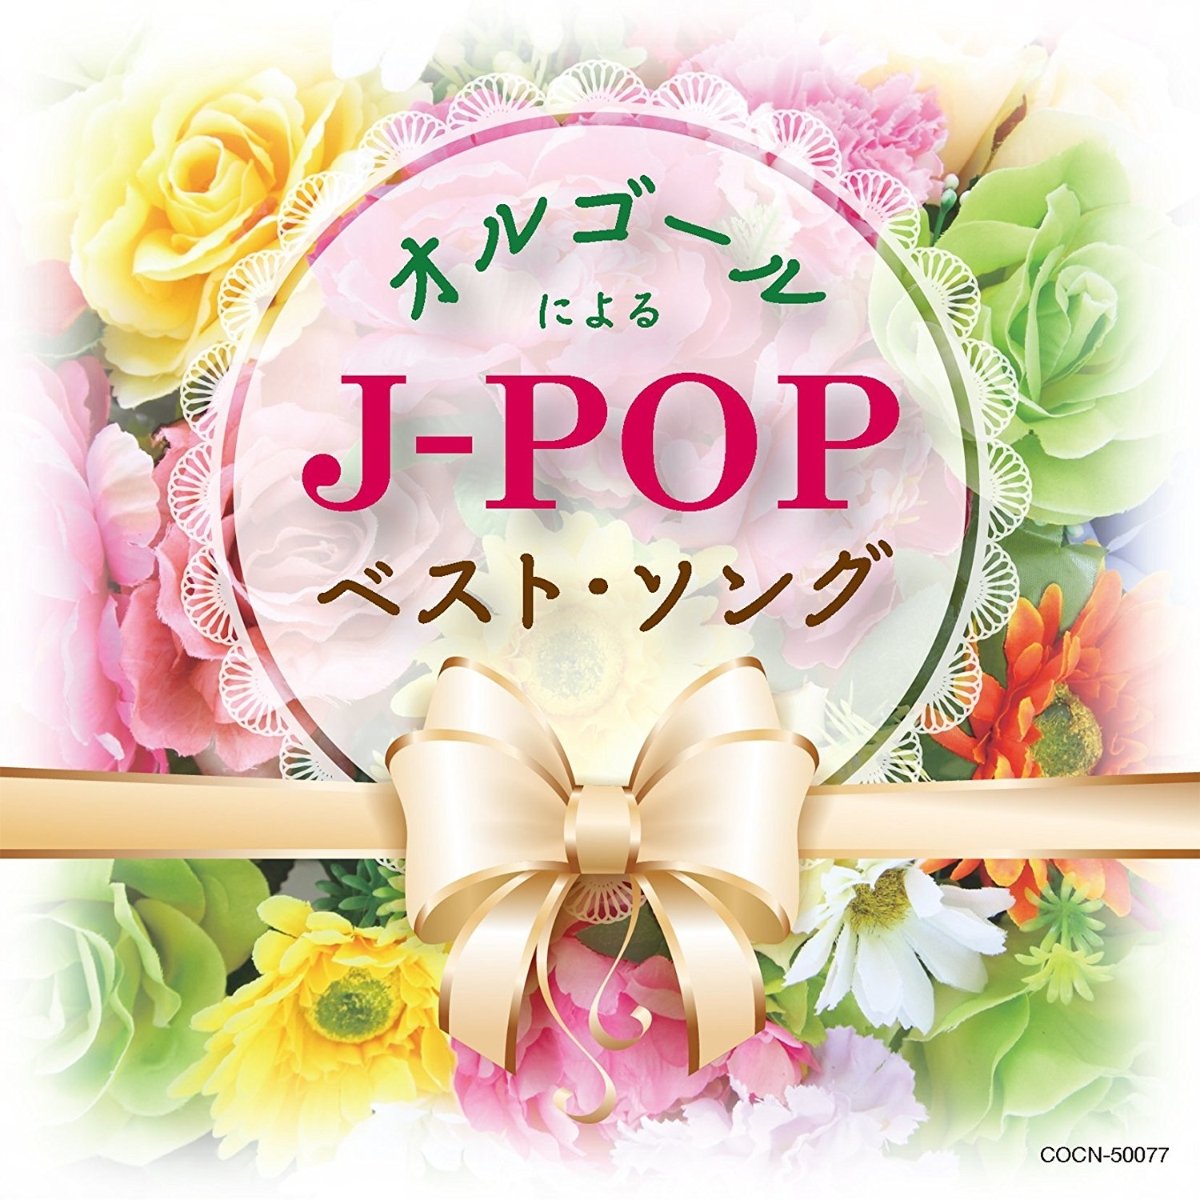 CD Shop - OST ORGEL NI YORU J-POP BEST SONG